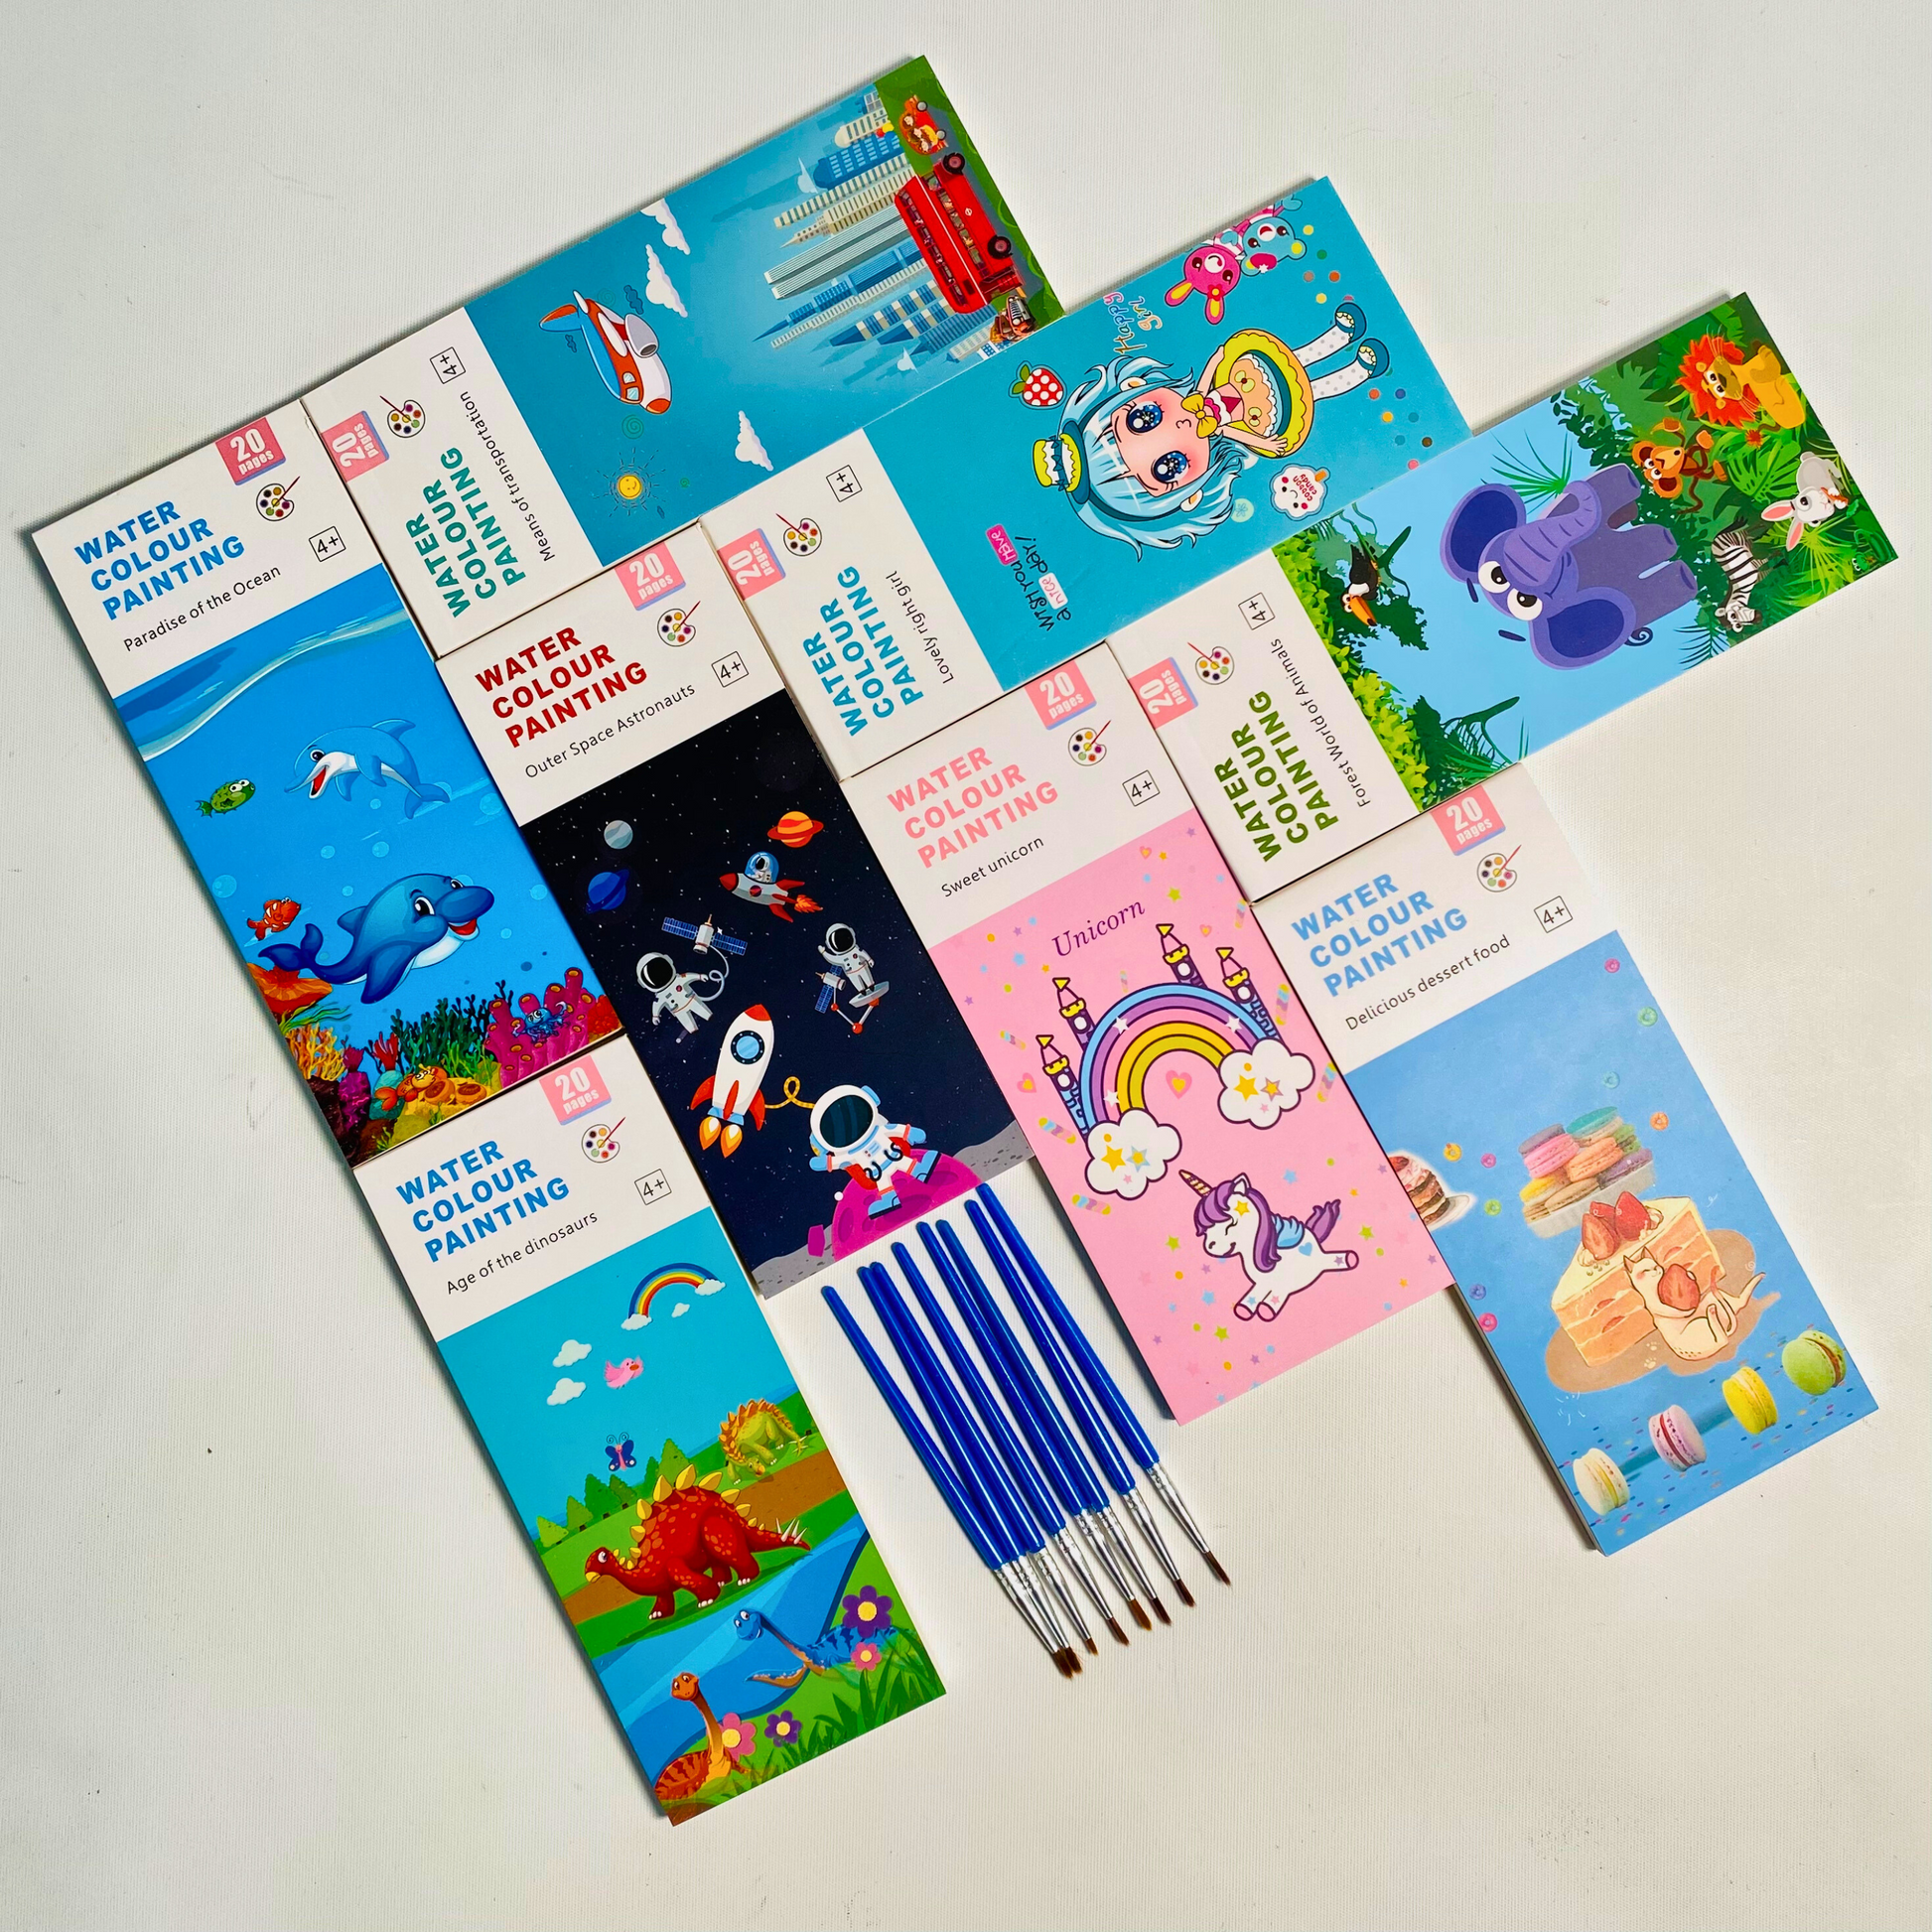 Magic Book for Kids Activity Books for Children